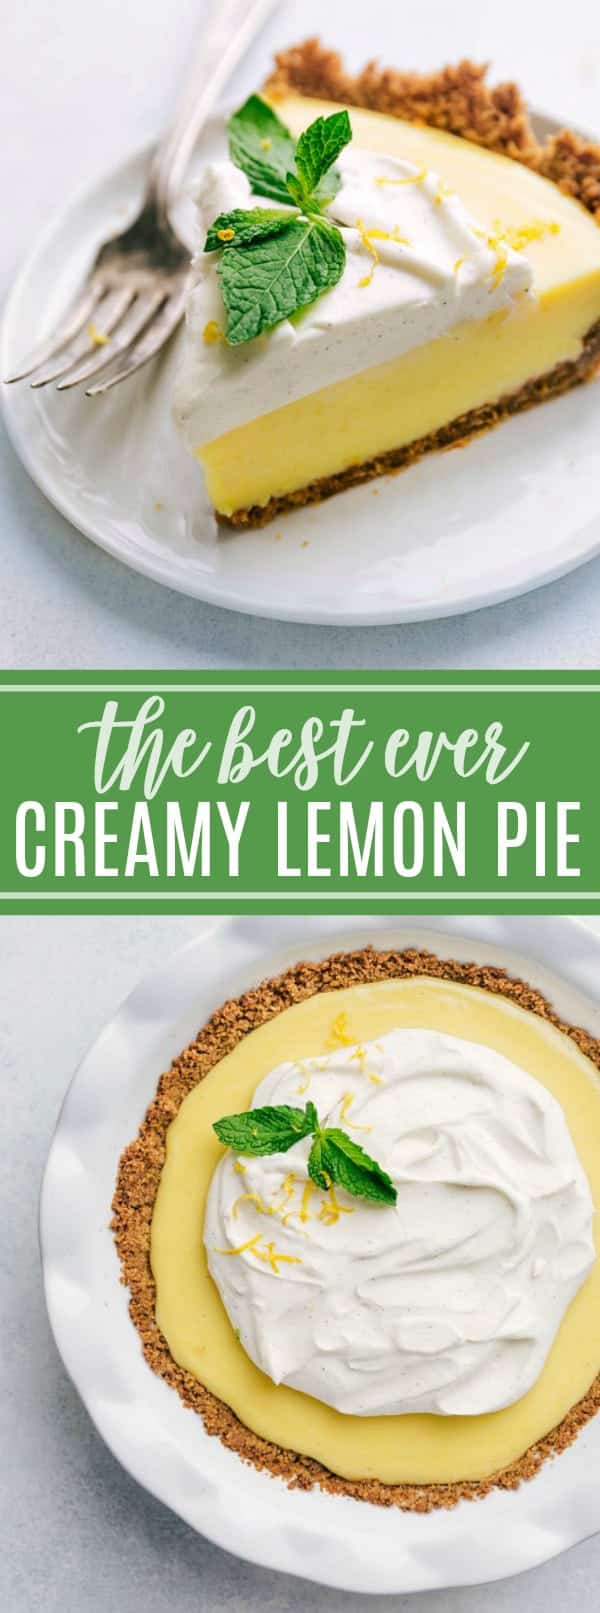 The ultimate BEST EVER creamy lemon pie! Based off of Joanna Gaine's famous lemon magnolia pie! via chelseasmessyapron.com #lemon #creamy #pie #dessert #summer #treat #cream #joanna #gaine #magnolia